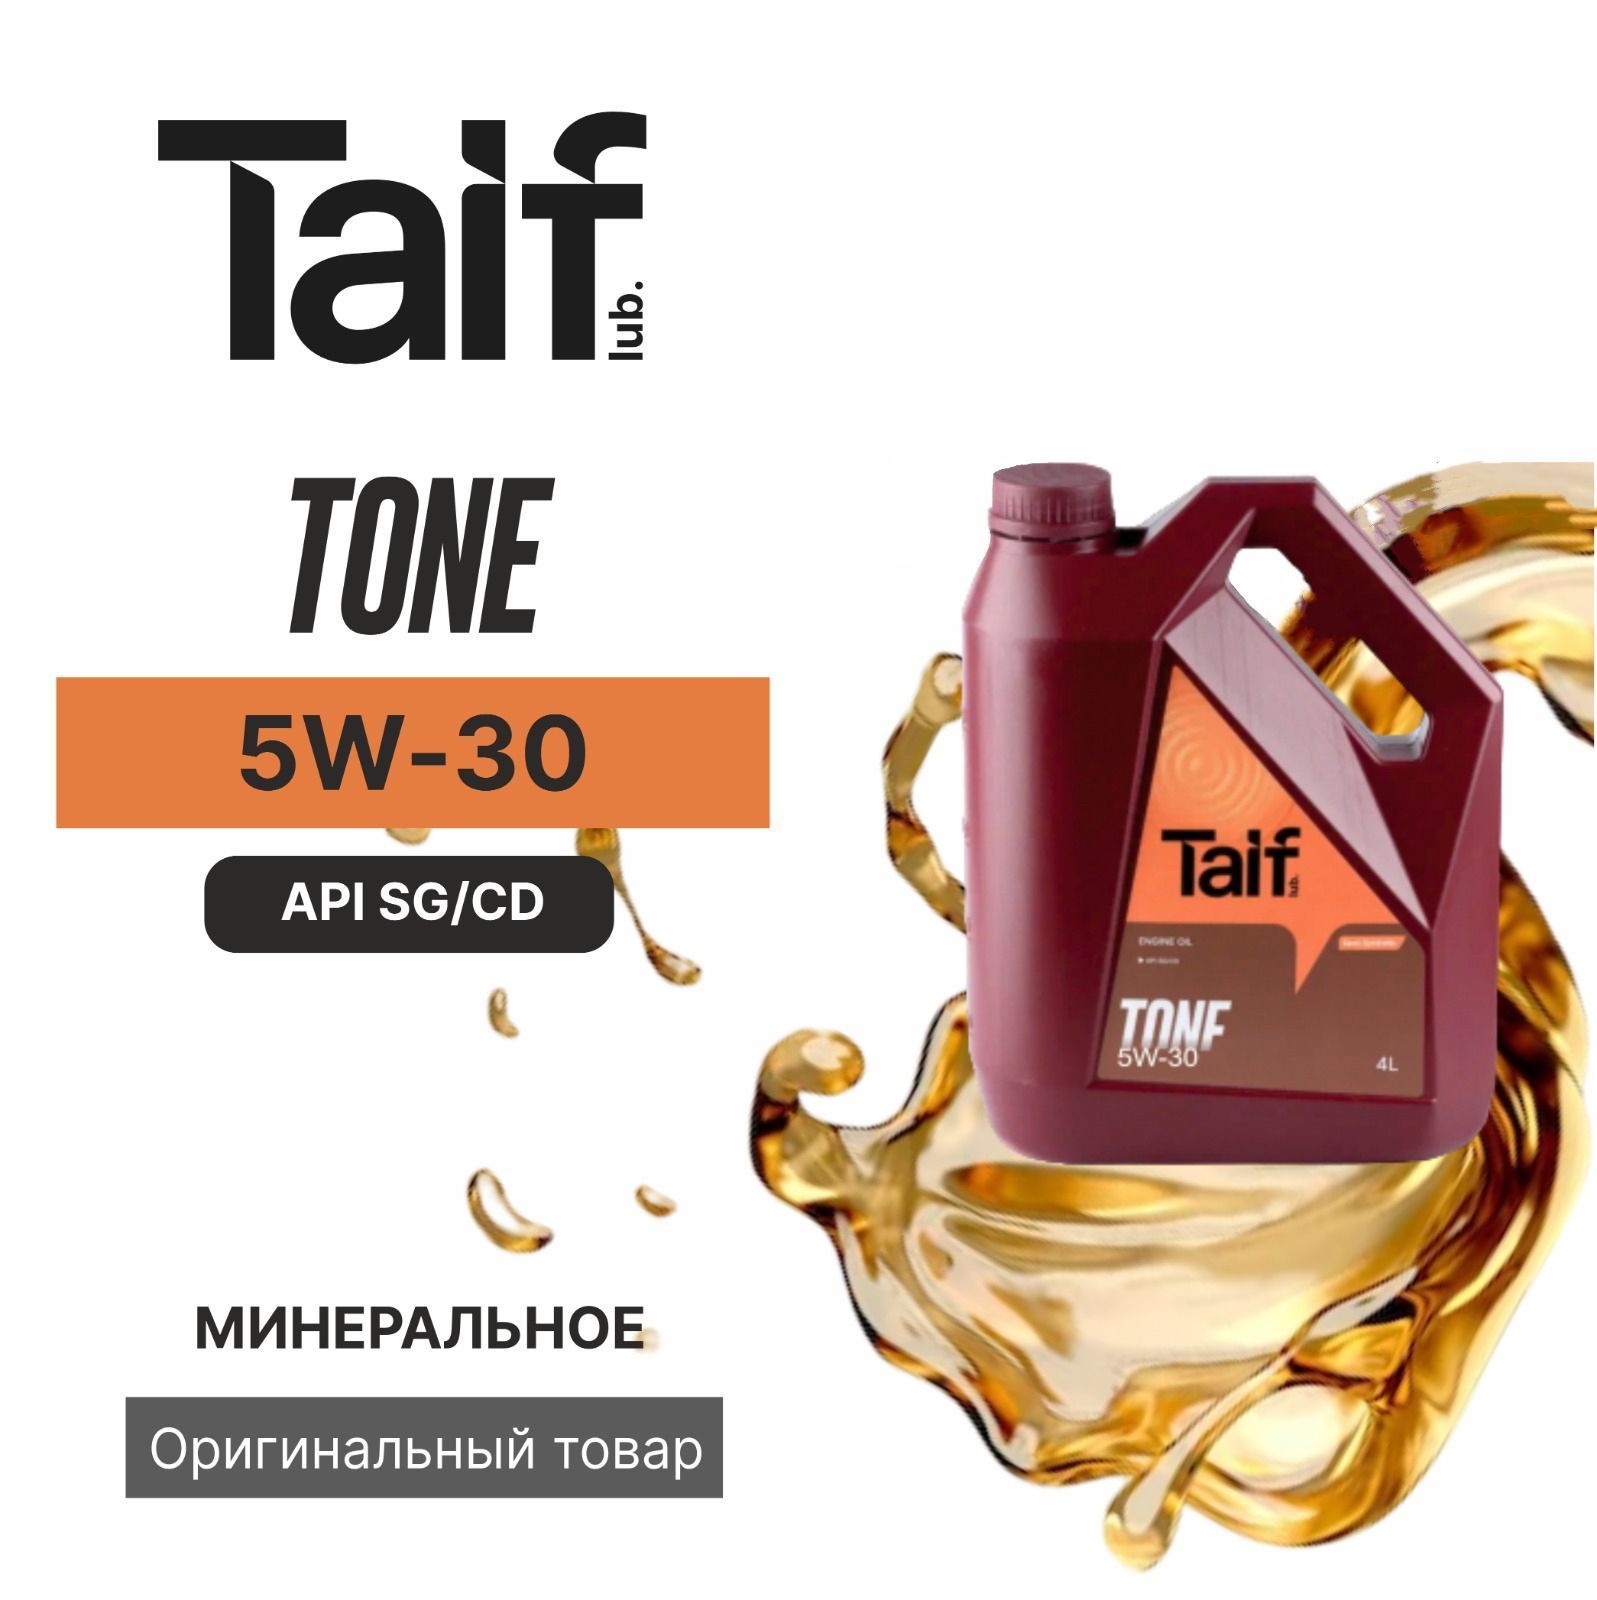 Моторное масло таиф отзывы. Моторное масло ТАИФ 5w30 танто характеристики отзывы.